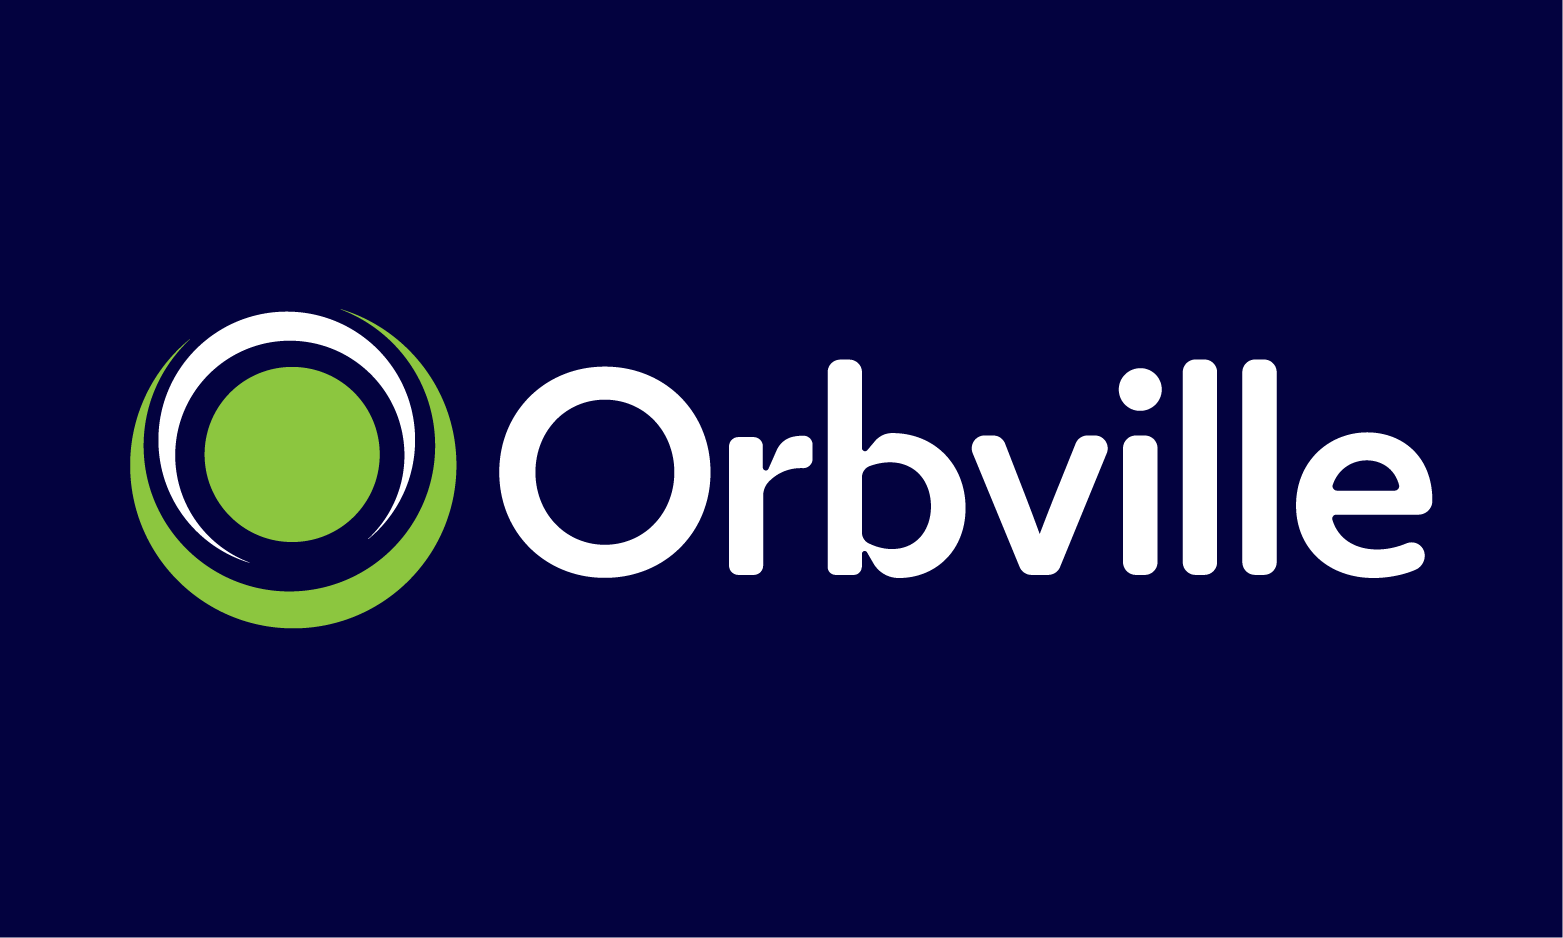 OrbVille.com - Creative brandable domain for sale